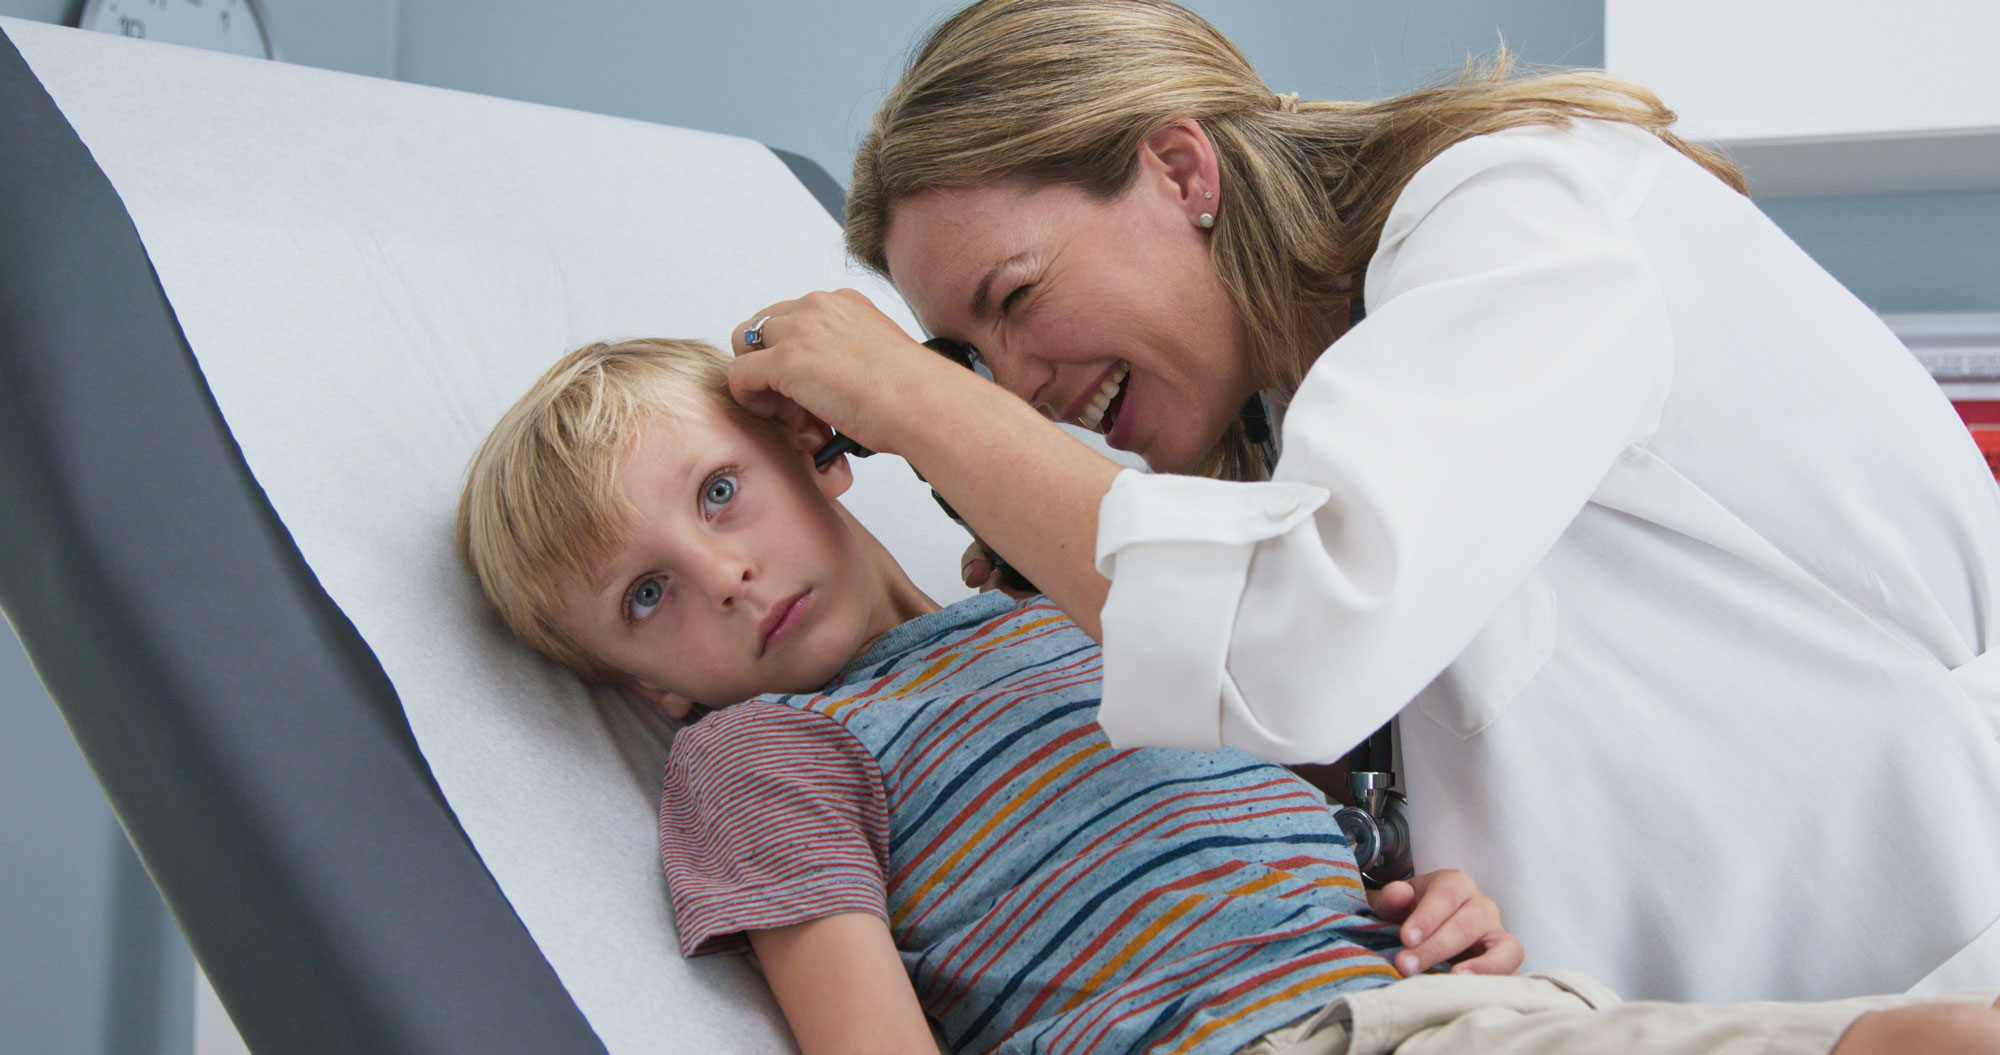 nurse examines child’s ear